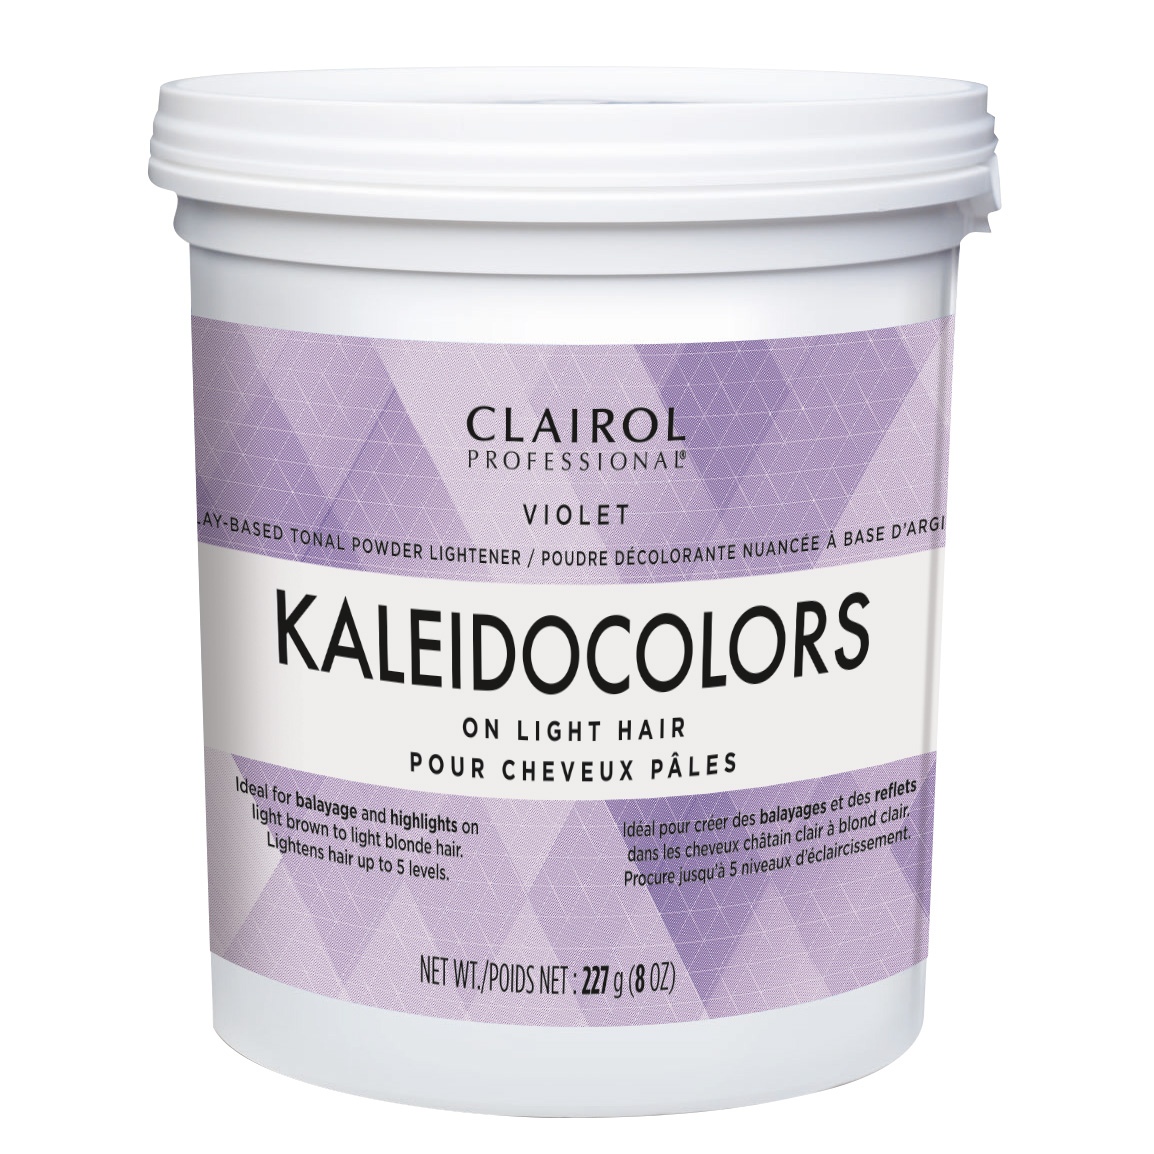 Clairol Kaleidocolor Violet